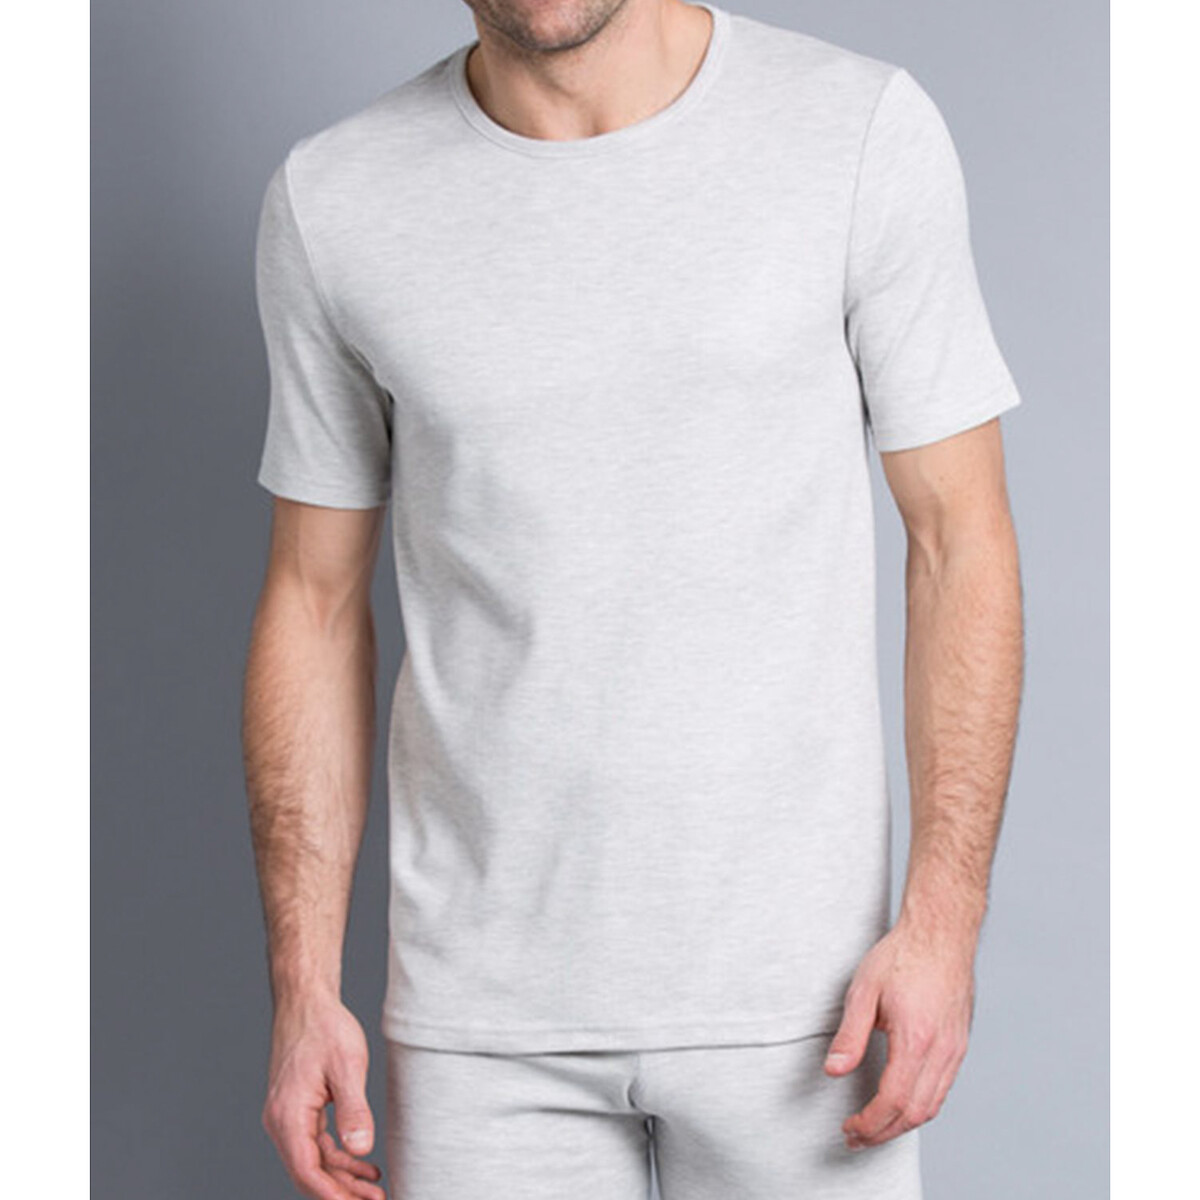 T-shirt DAMART Manches courtes maille interlock degr 3 M серый, размер M - фото 1